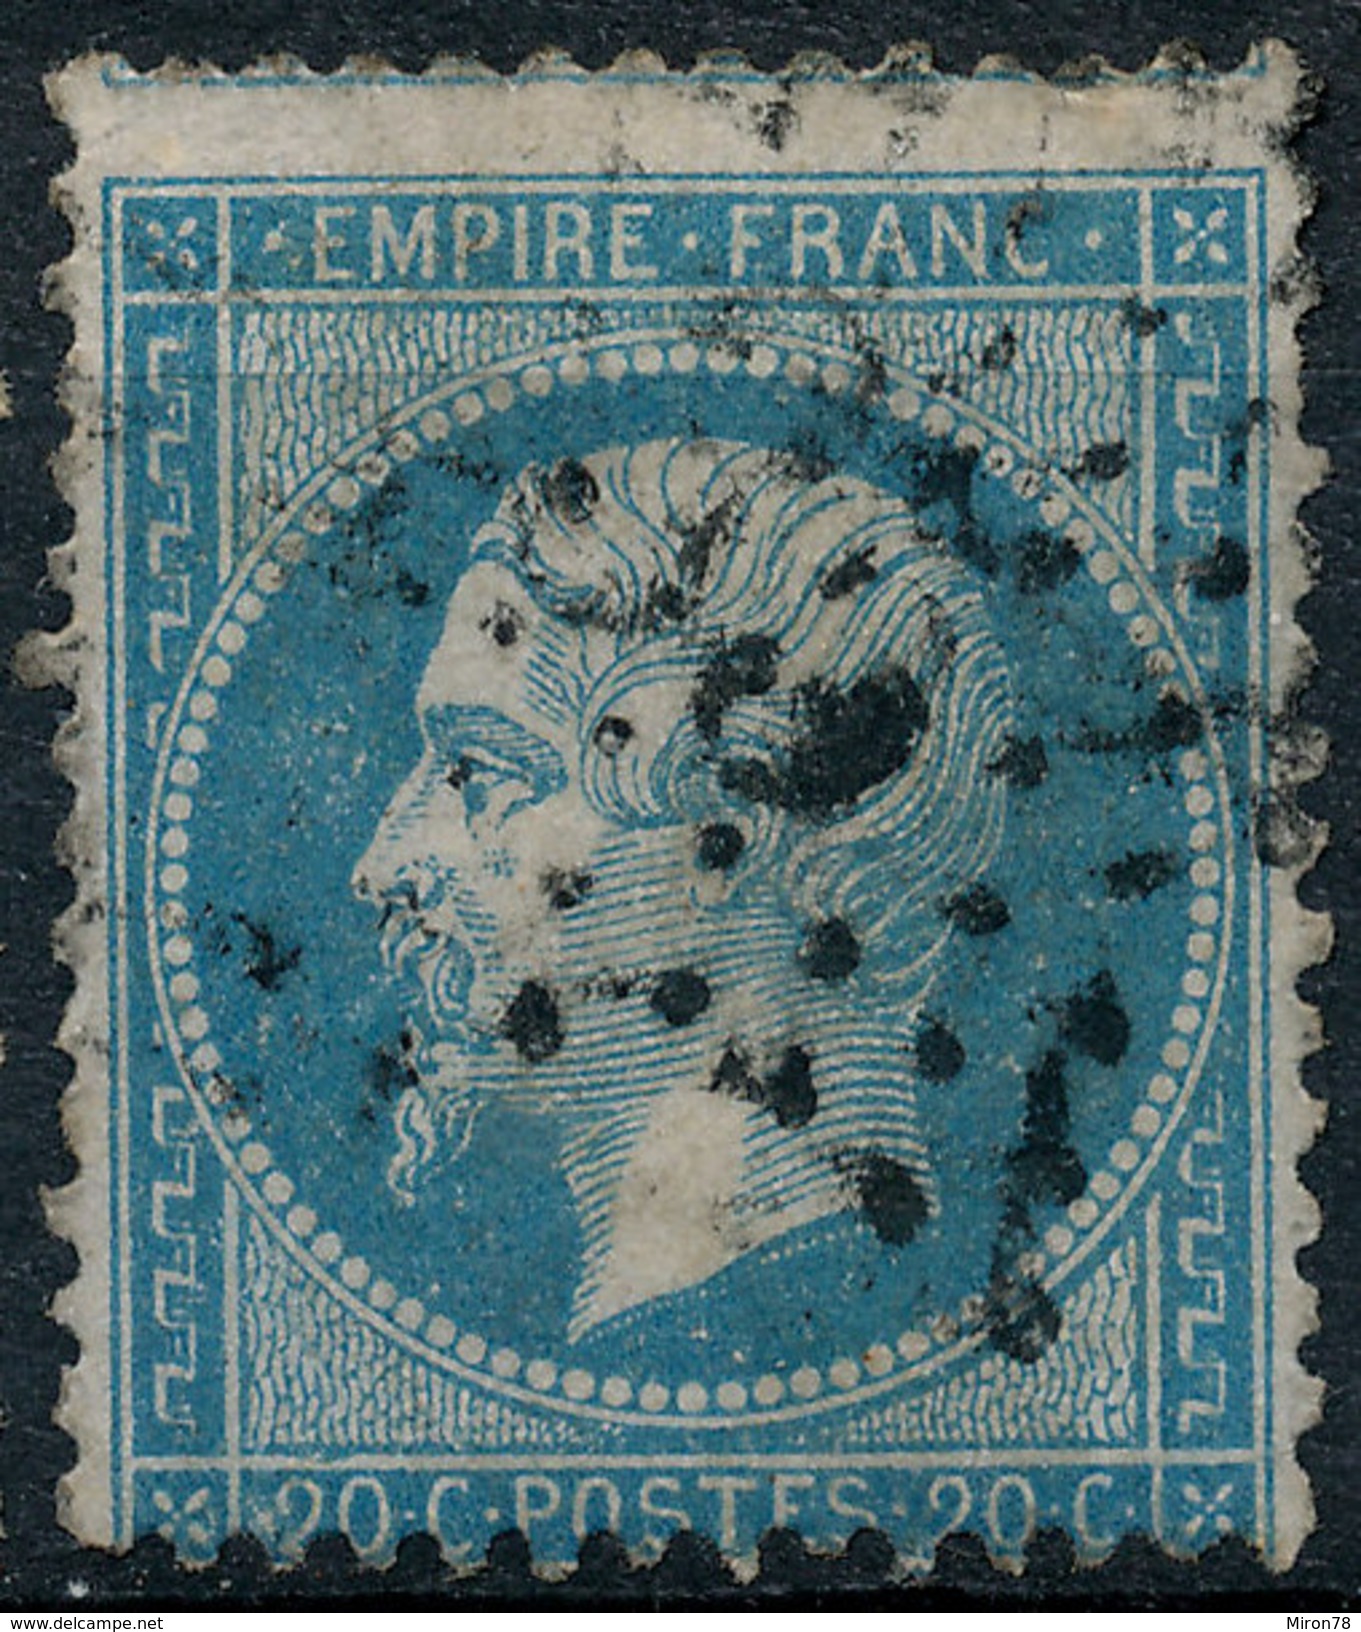 Stamp France 1862 20c Numeral Used Lot#160 - 1862 Napoleon III